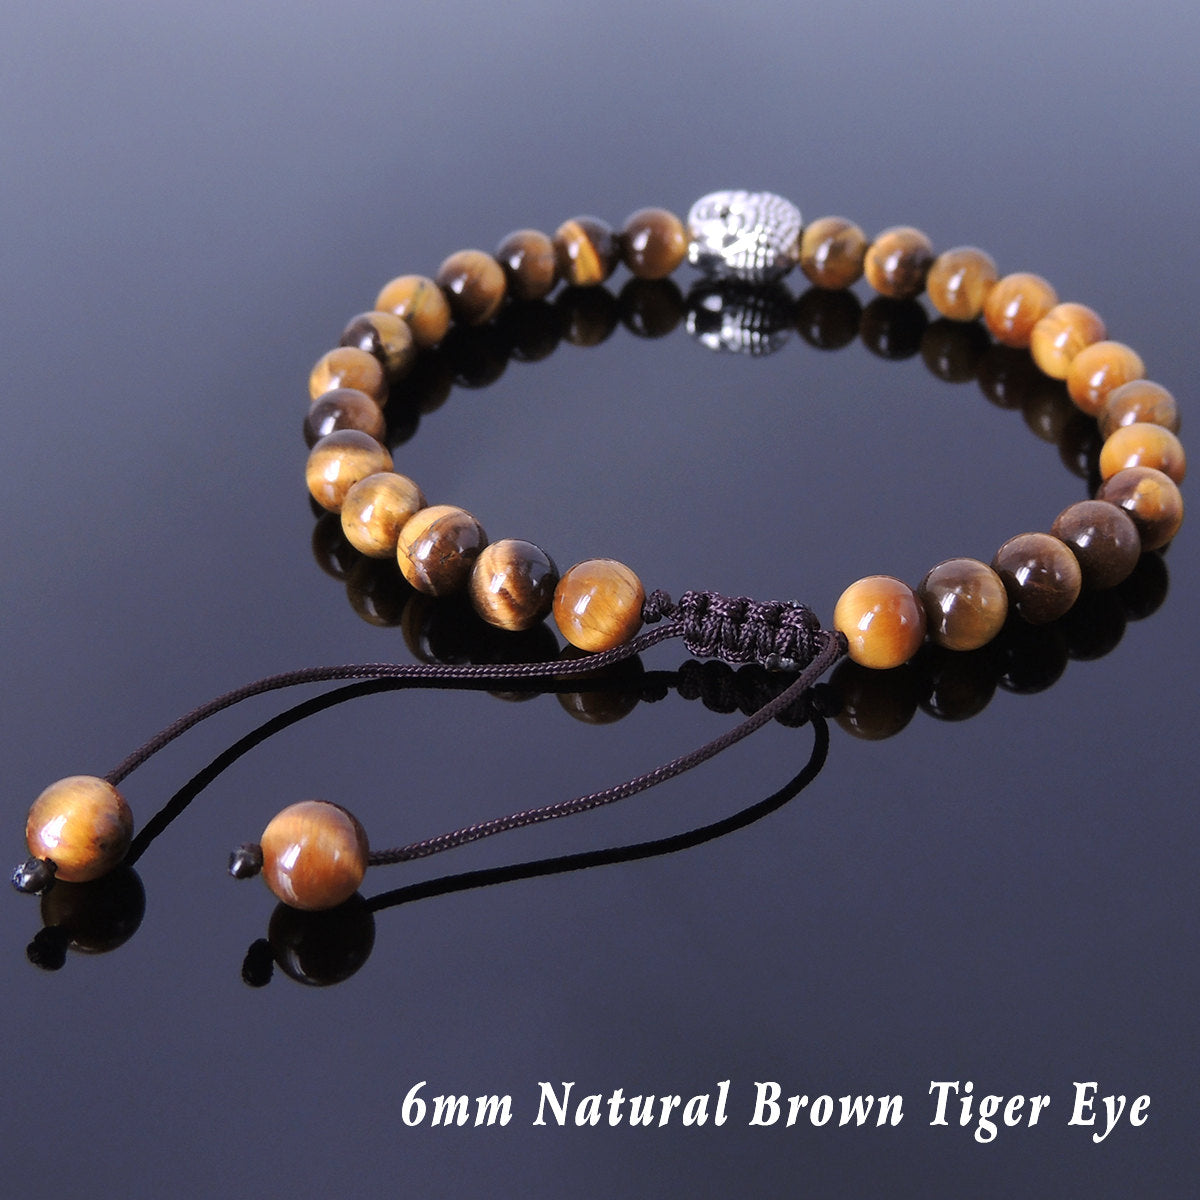 6mm Brown Tiger Eye Adjustable Braided Stone Bracelet with Tibetan Silver Sakyamuni Buddha Bead - Handmade by Gem & Silver TSB111